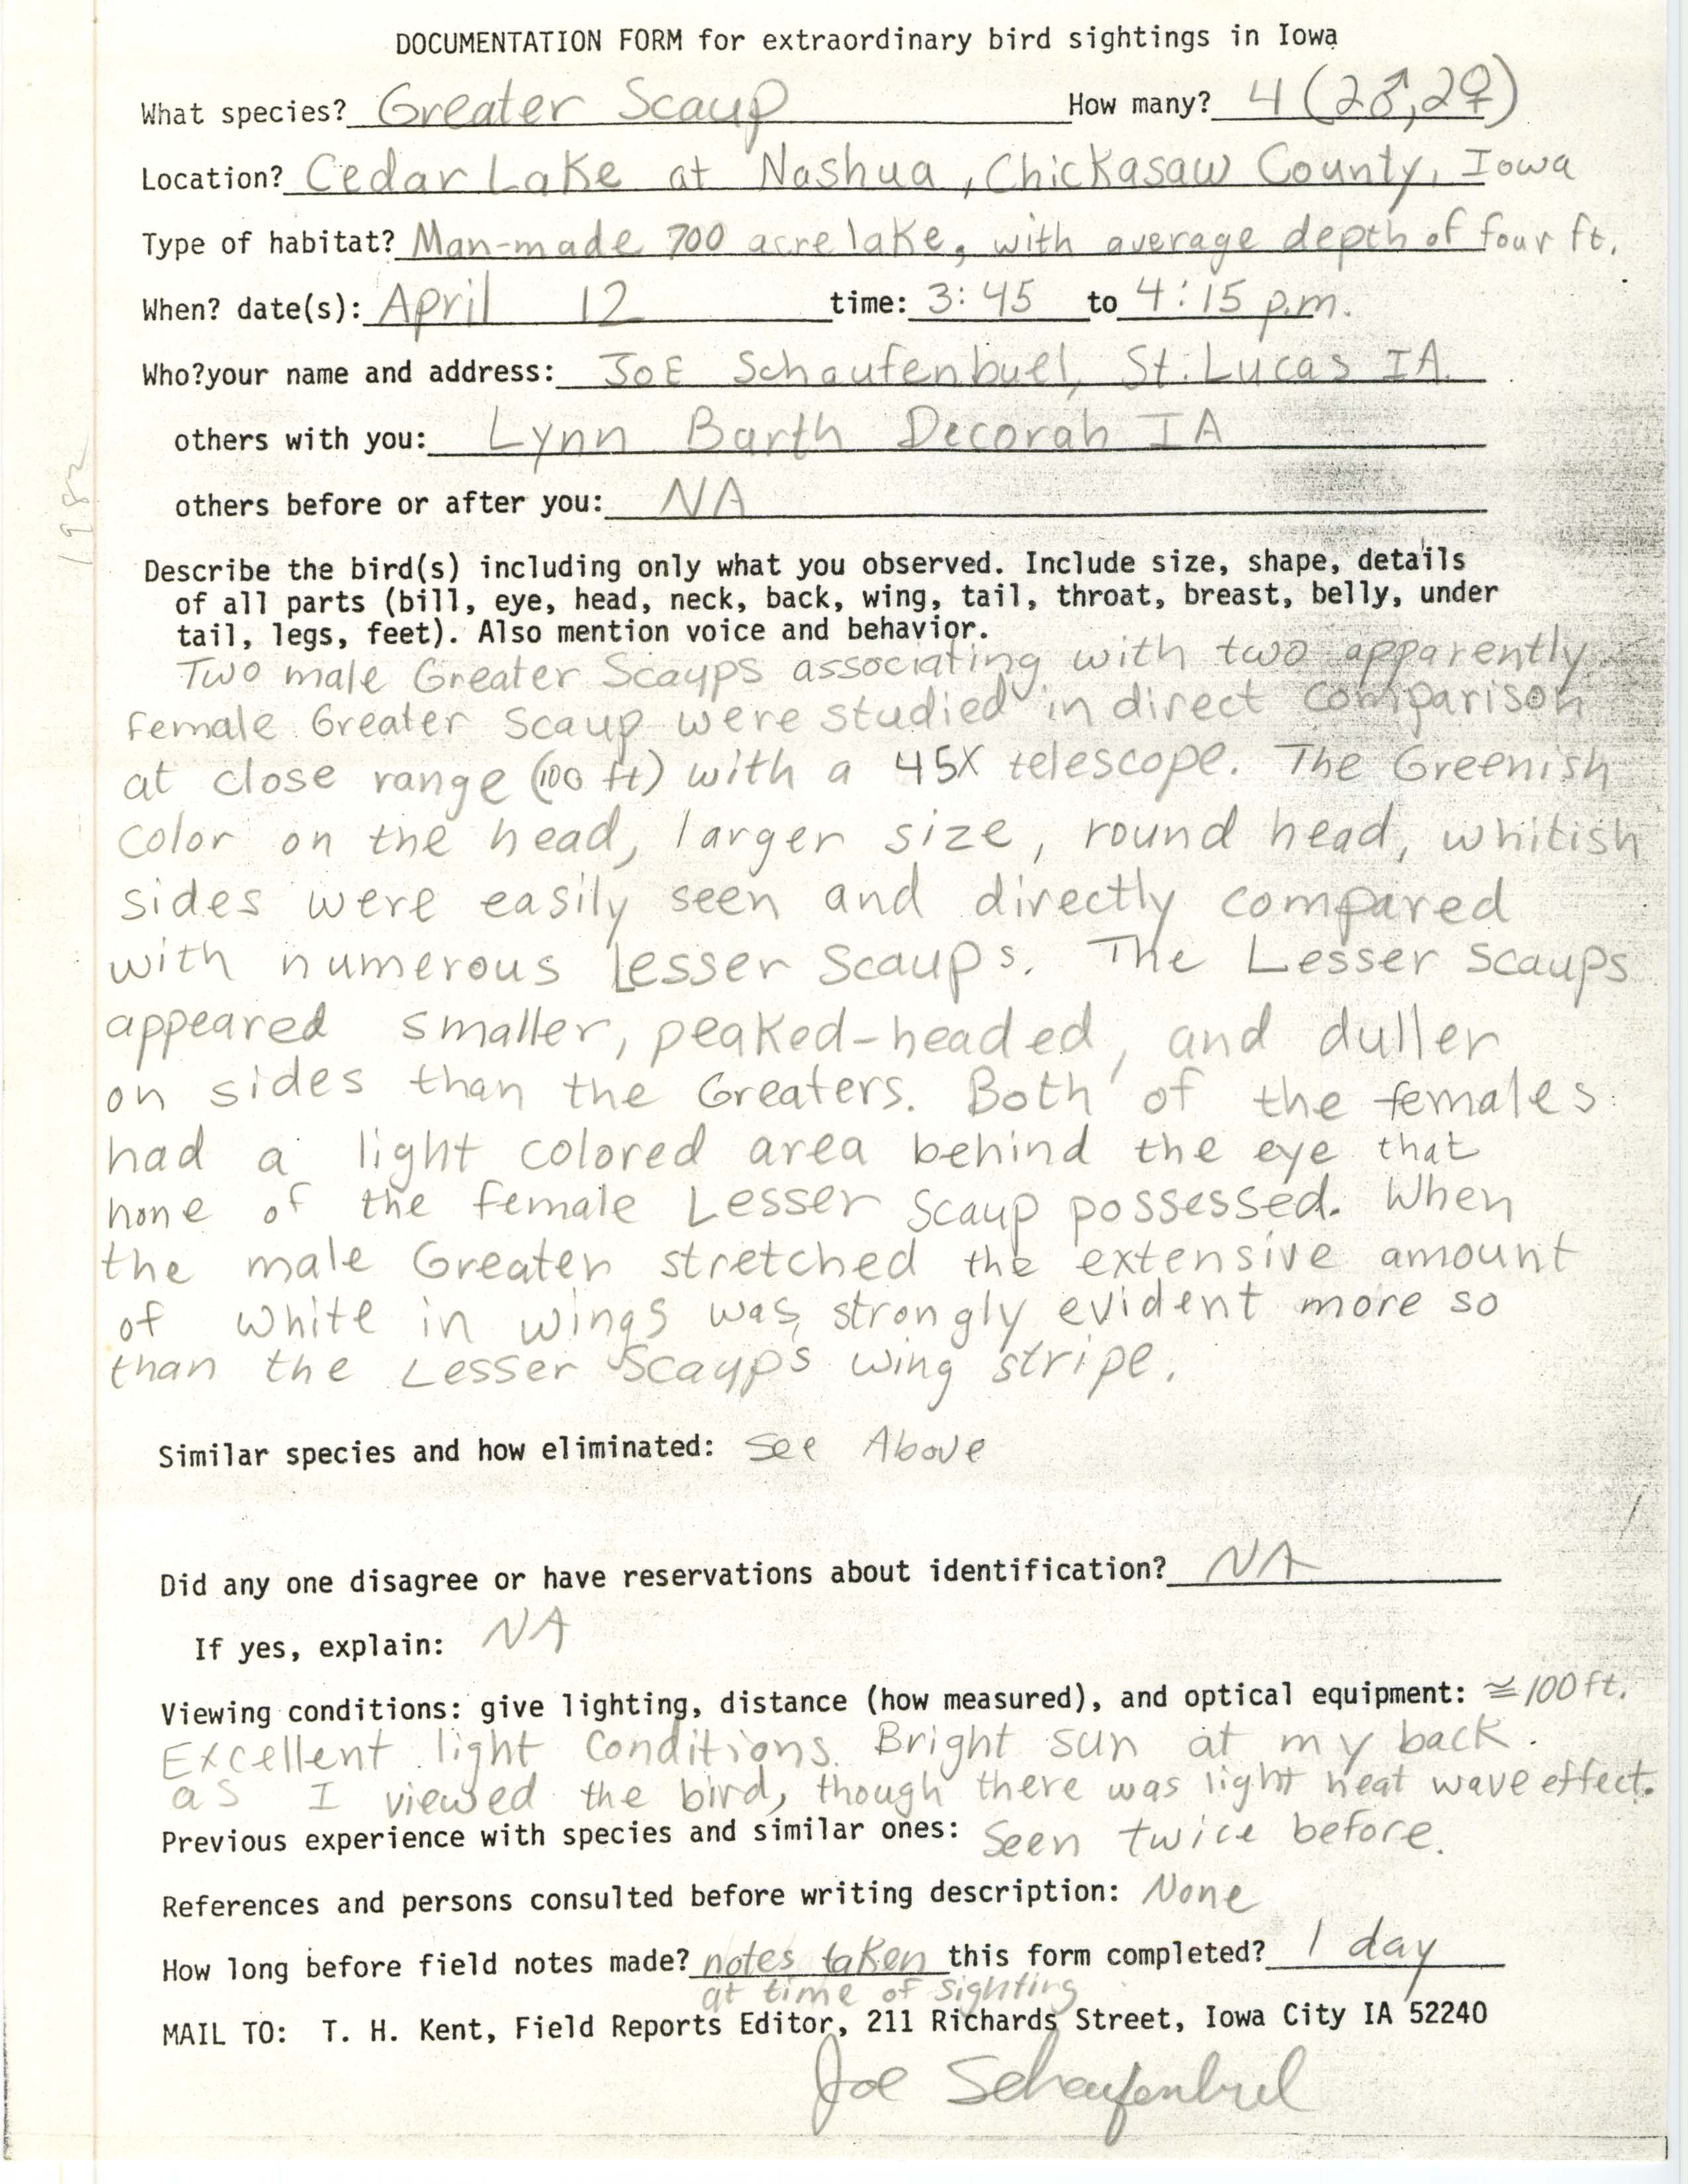 Rare bird documentation form for Greater Scaup at Cedar Lake, 1982